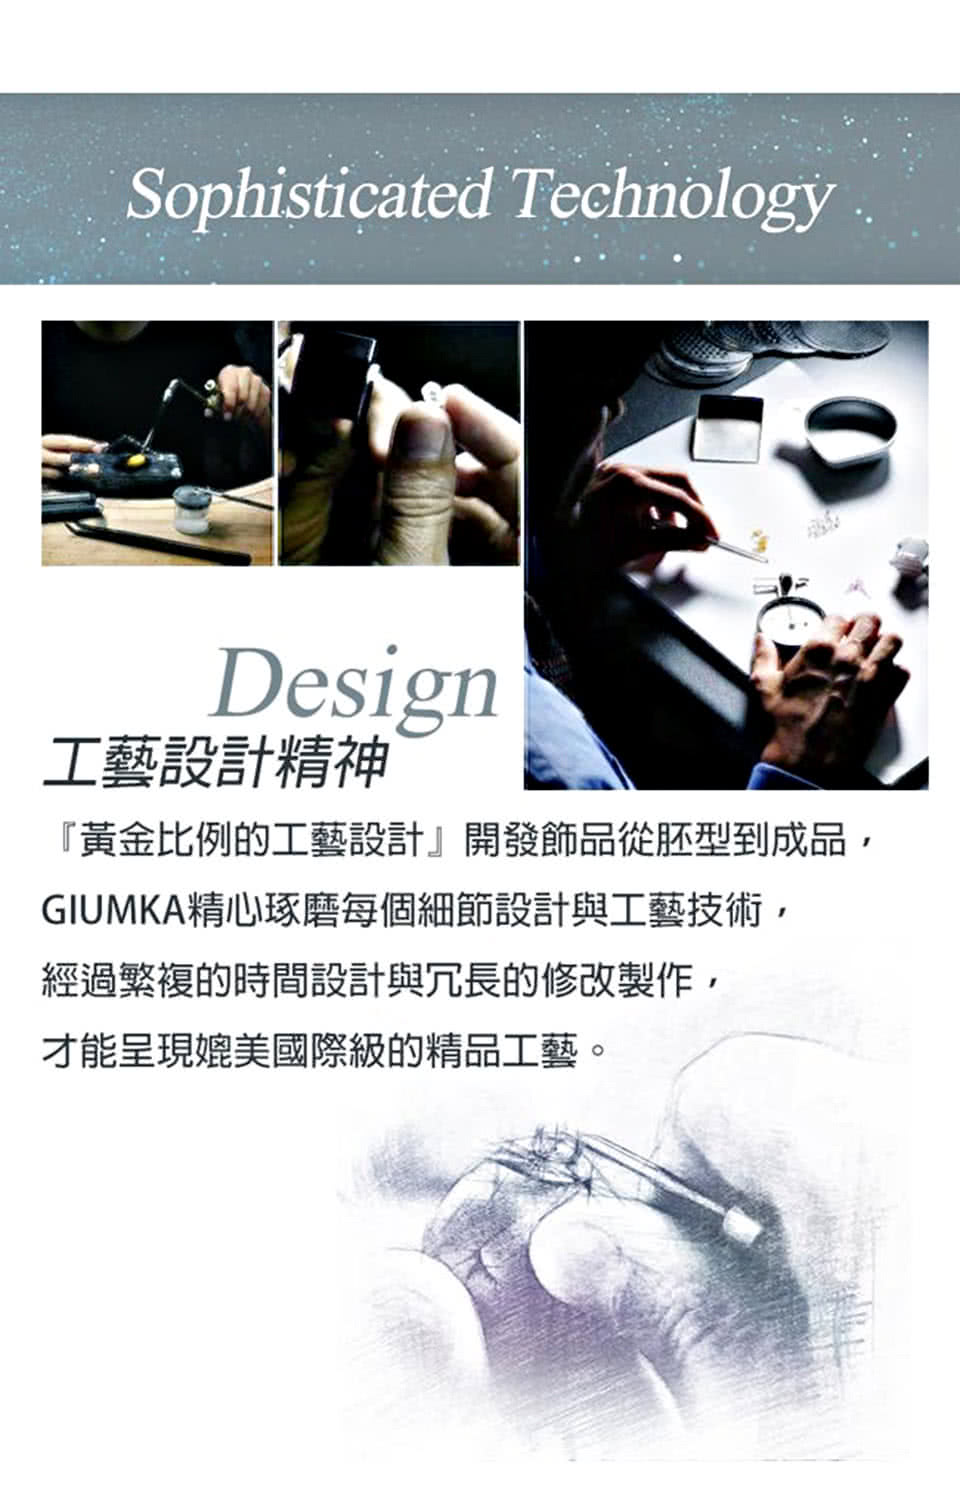 GIUMKAdesign.jpg